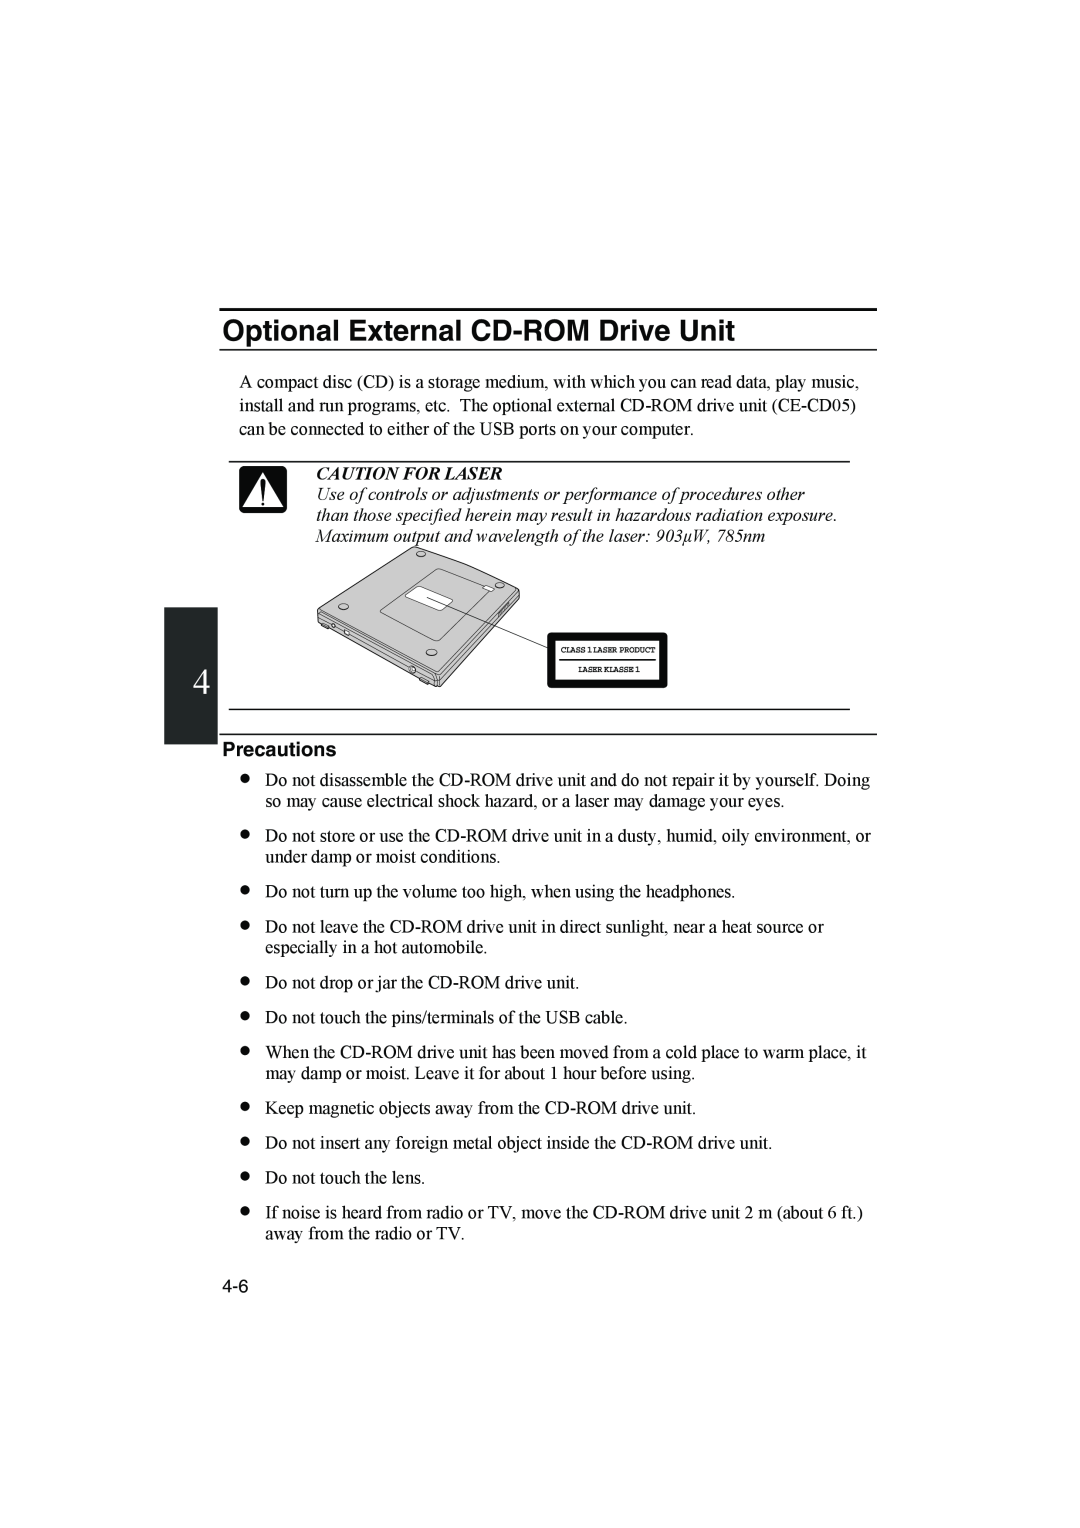 Sharp PC-MM1 manual Optional External CD-ROM Drive Unit, Precautions, Caution For Laser 